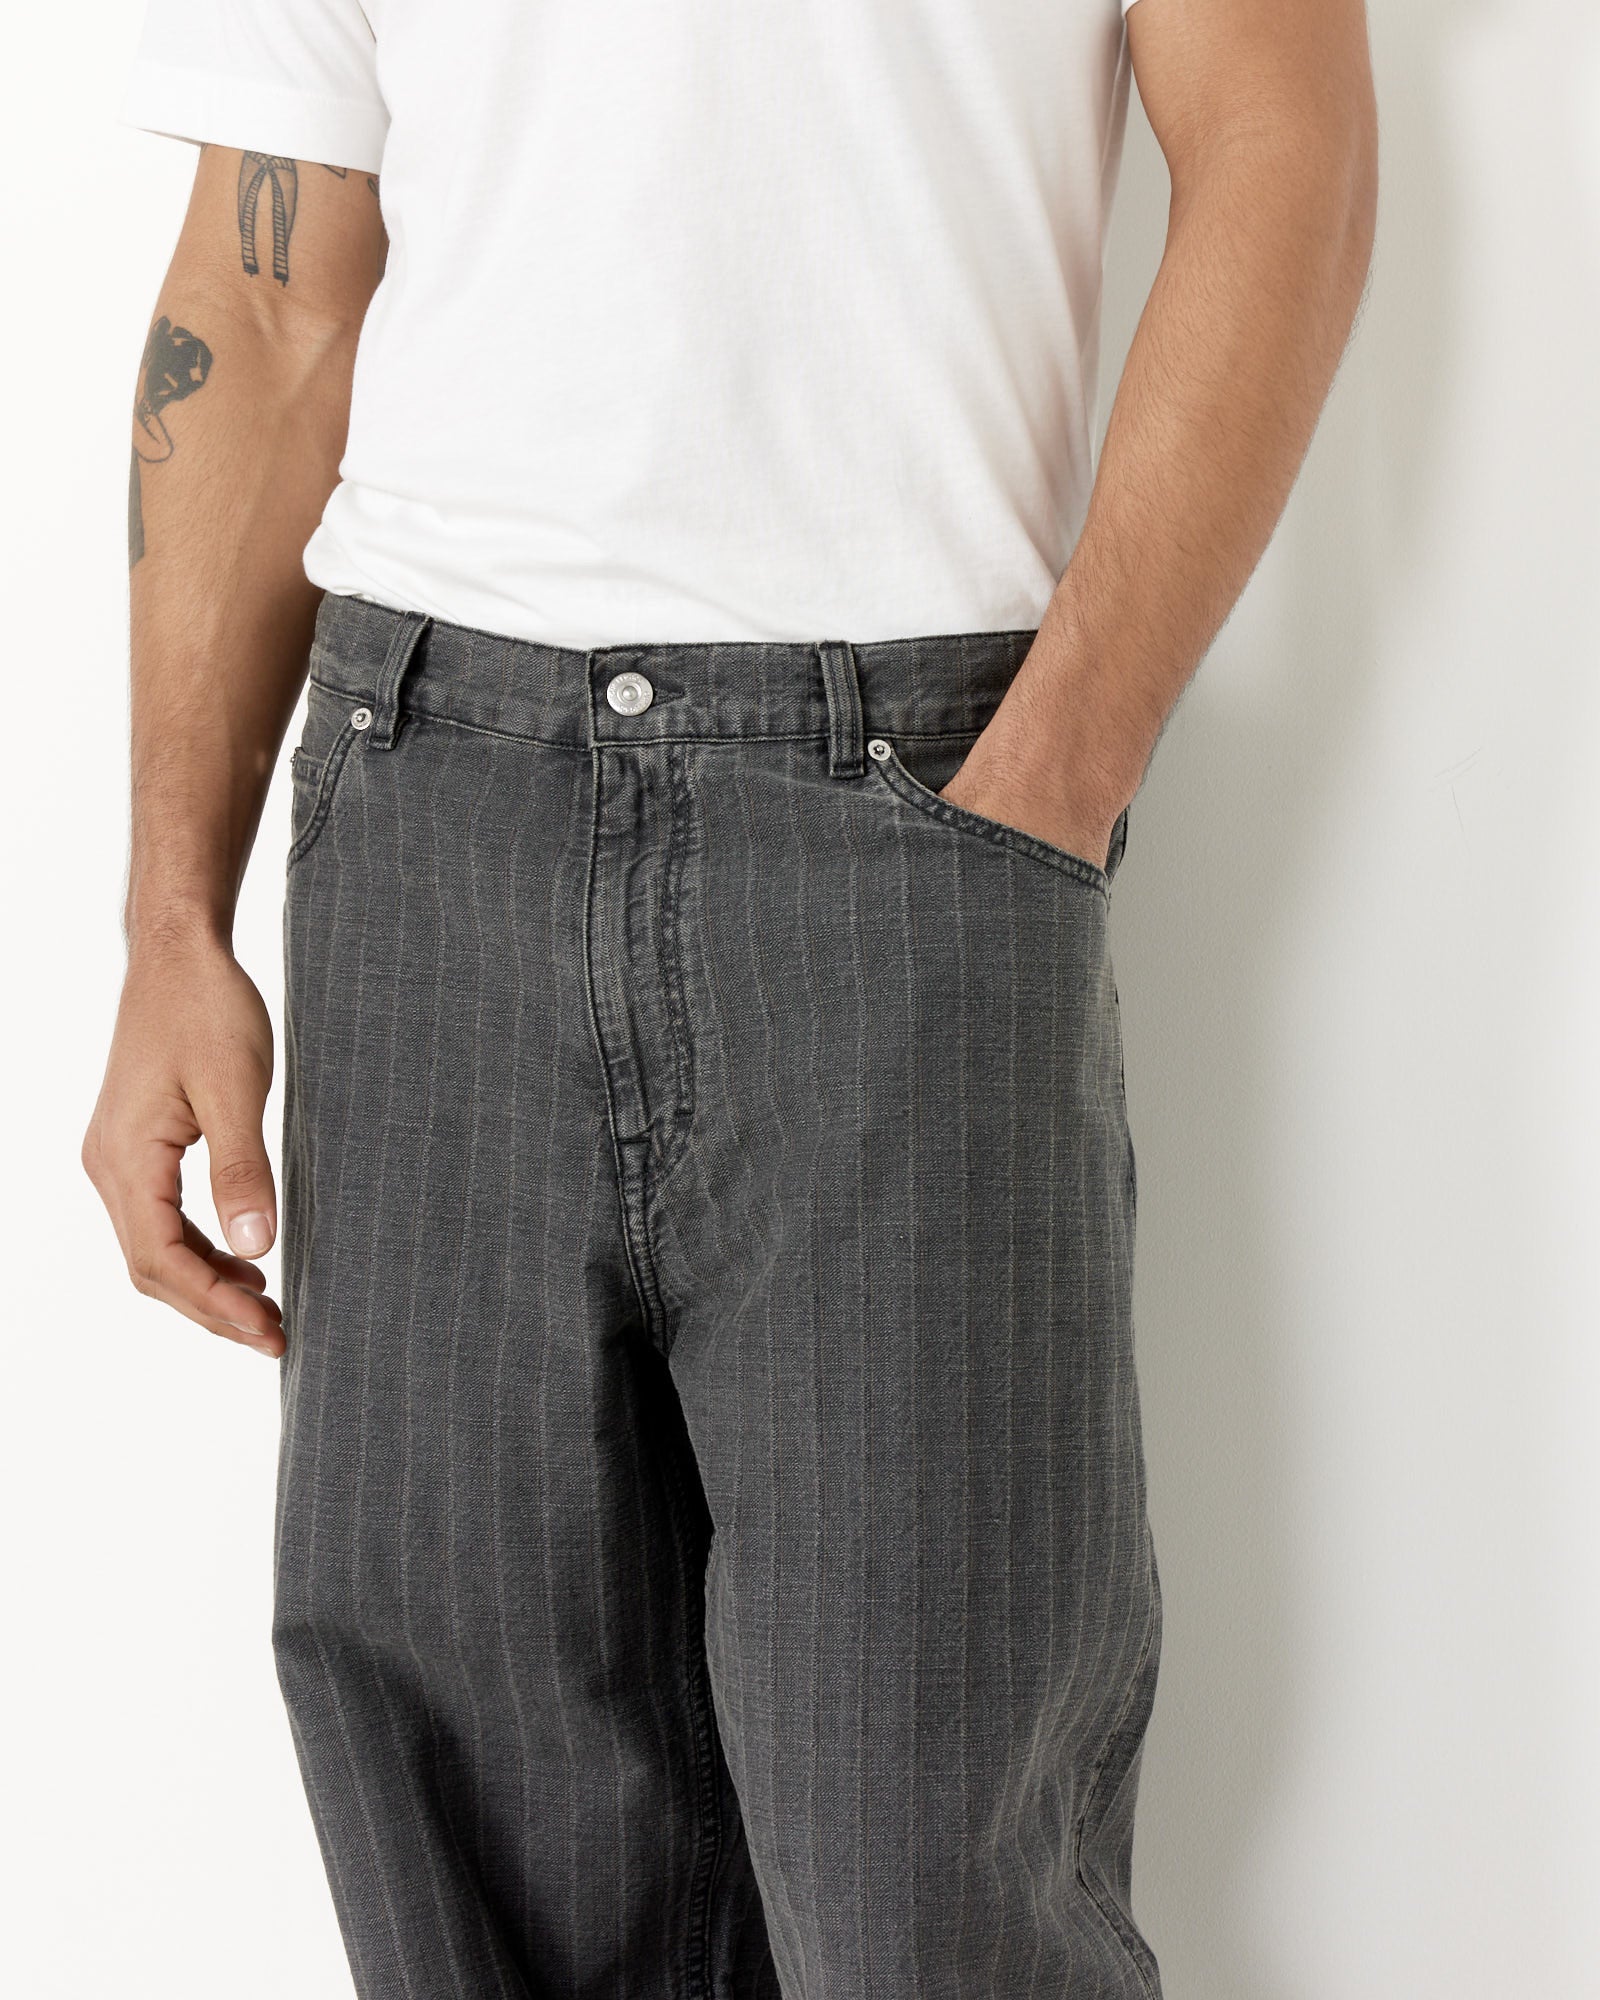 Vast Cut Pants in Washed Grey Torino Stripe